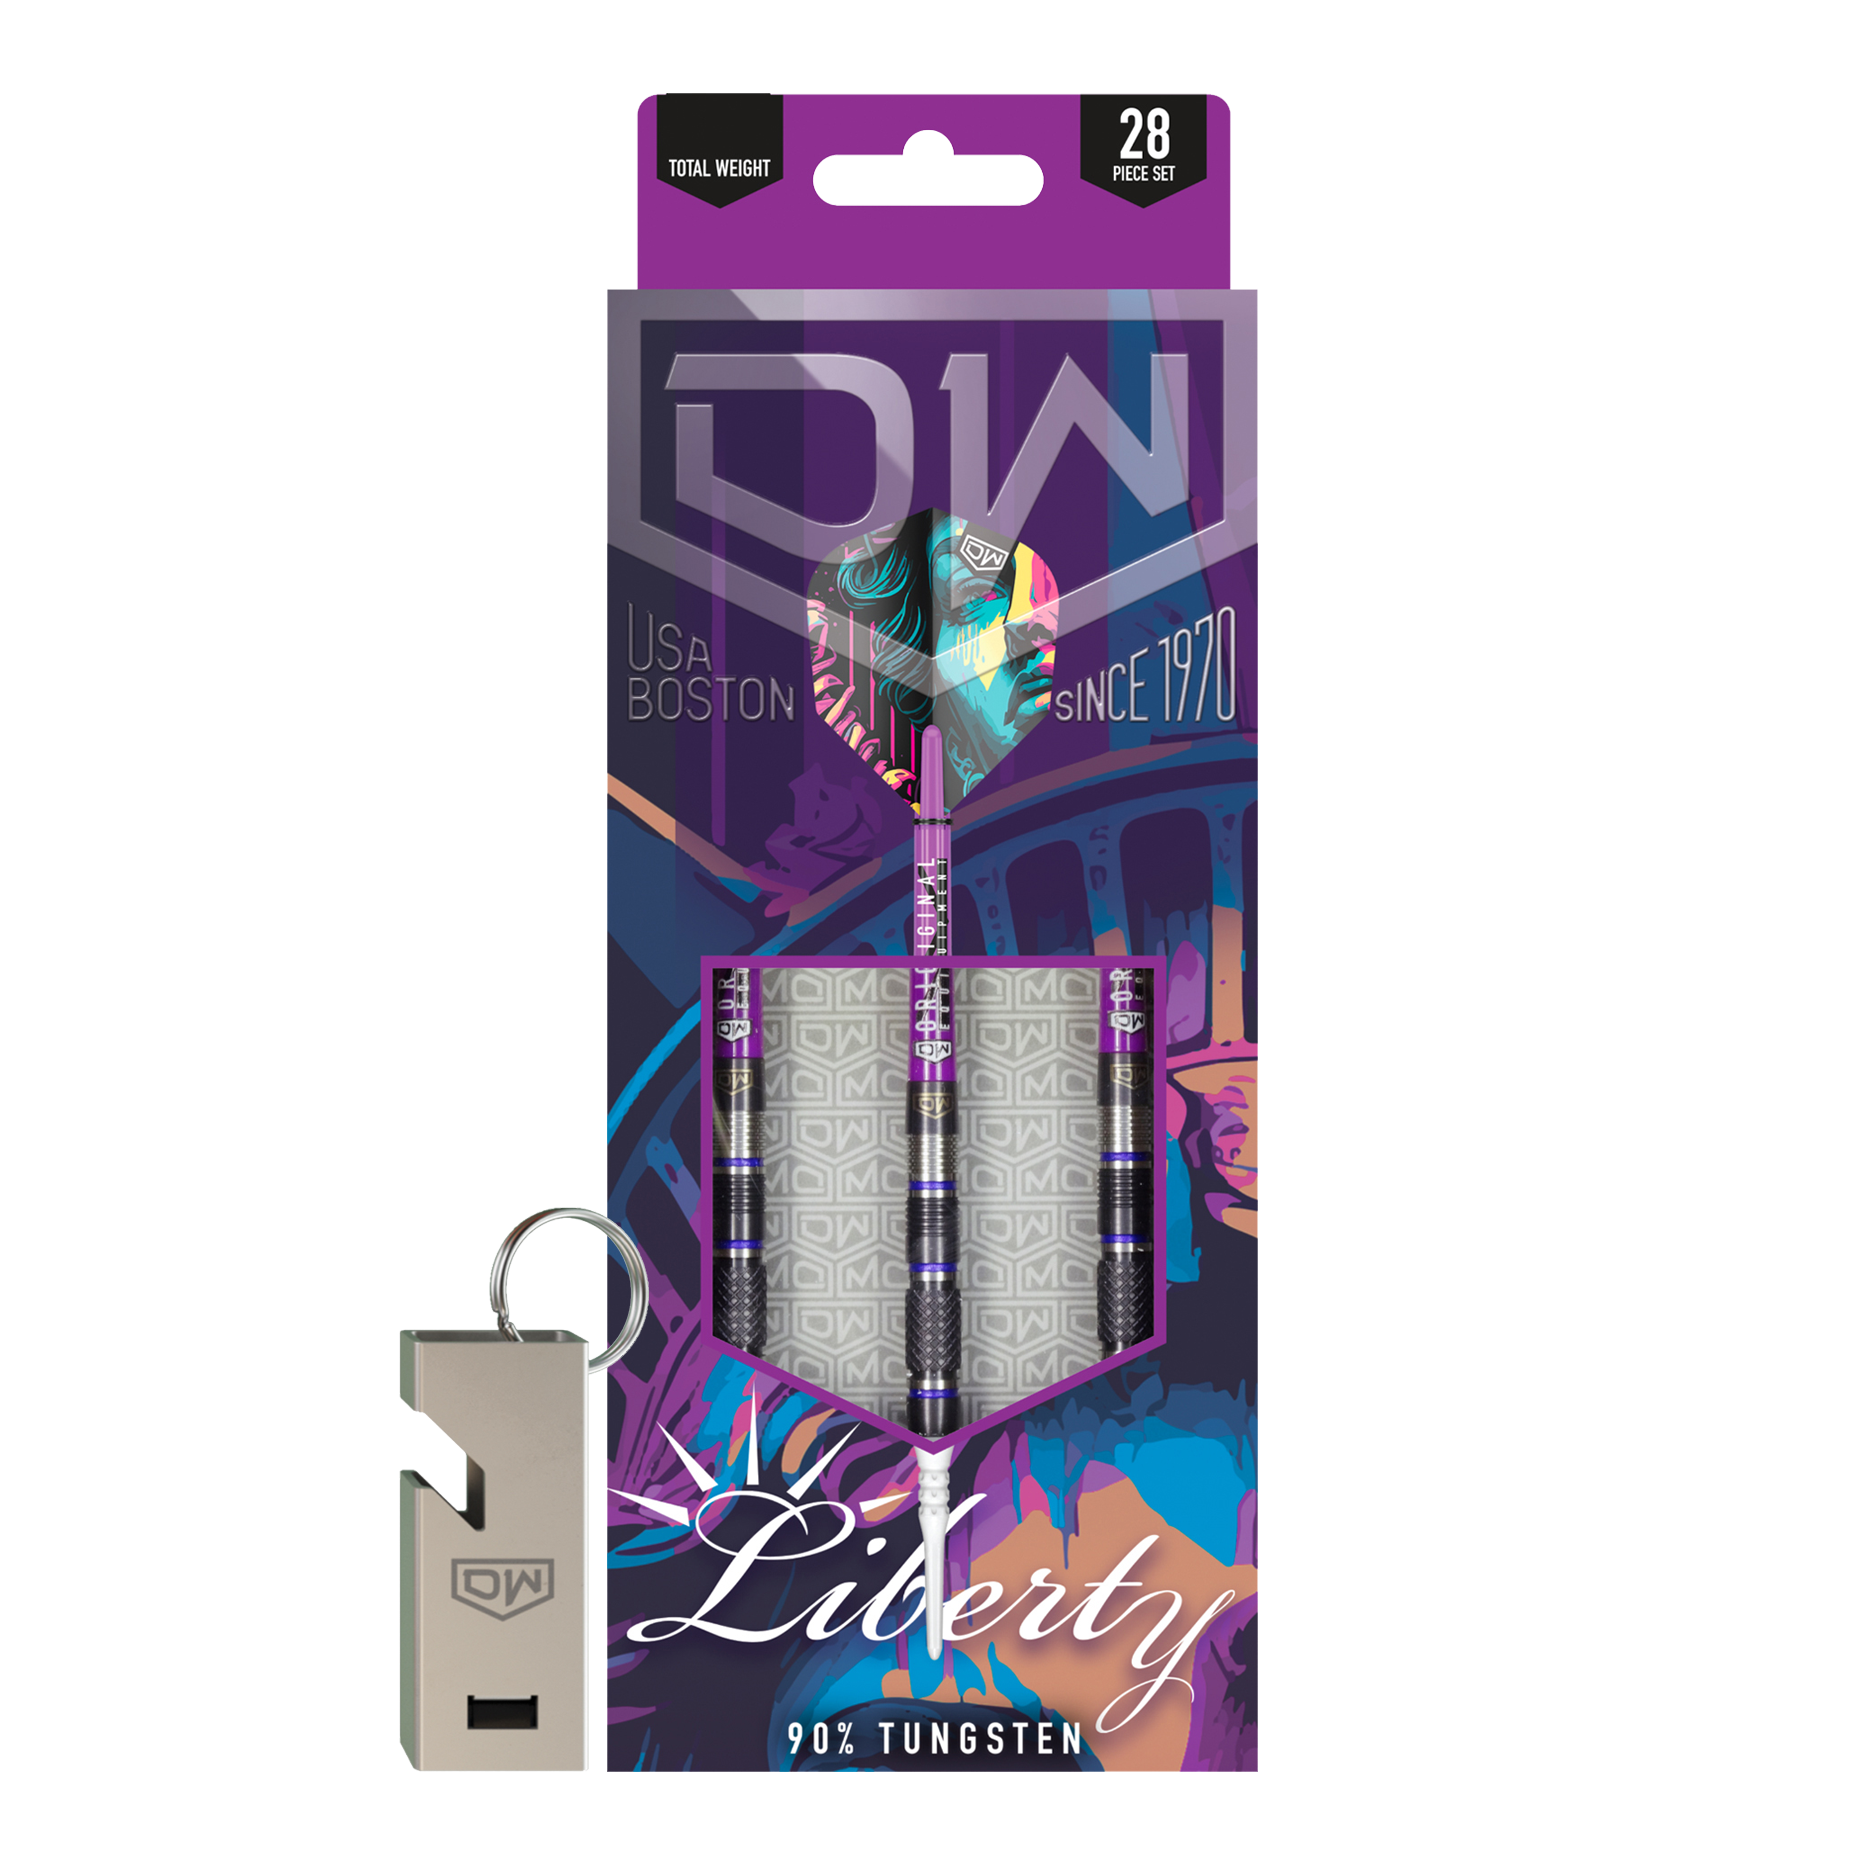 DW Liberty soft darts - 18g